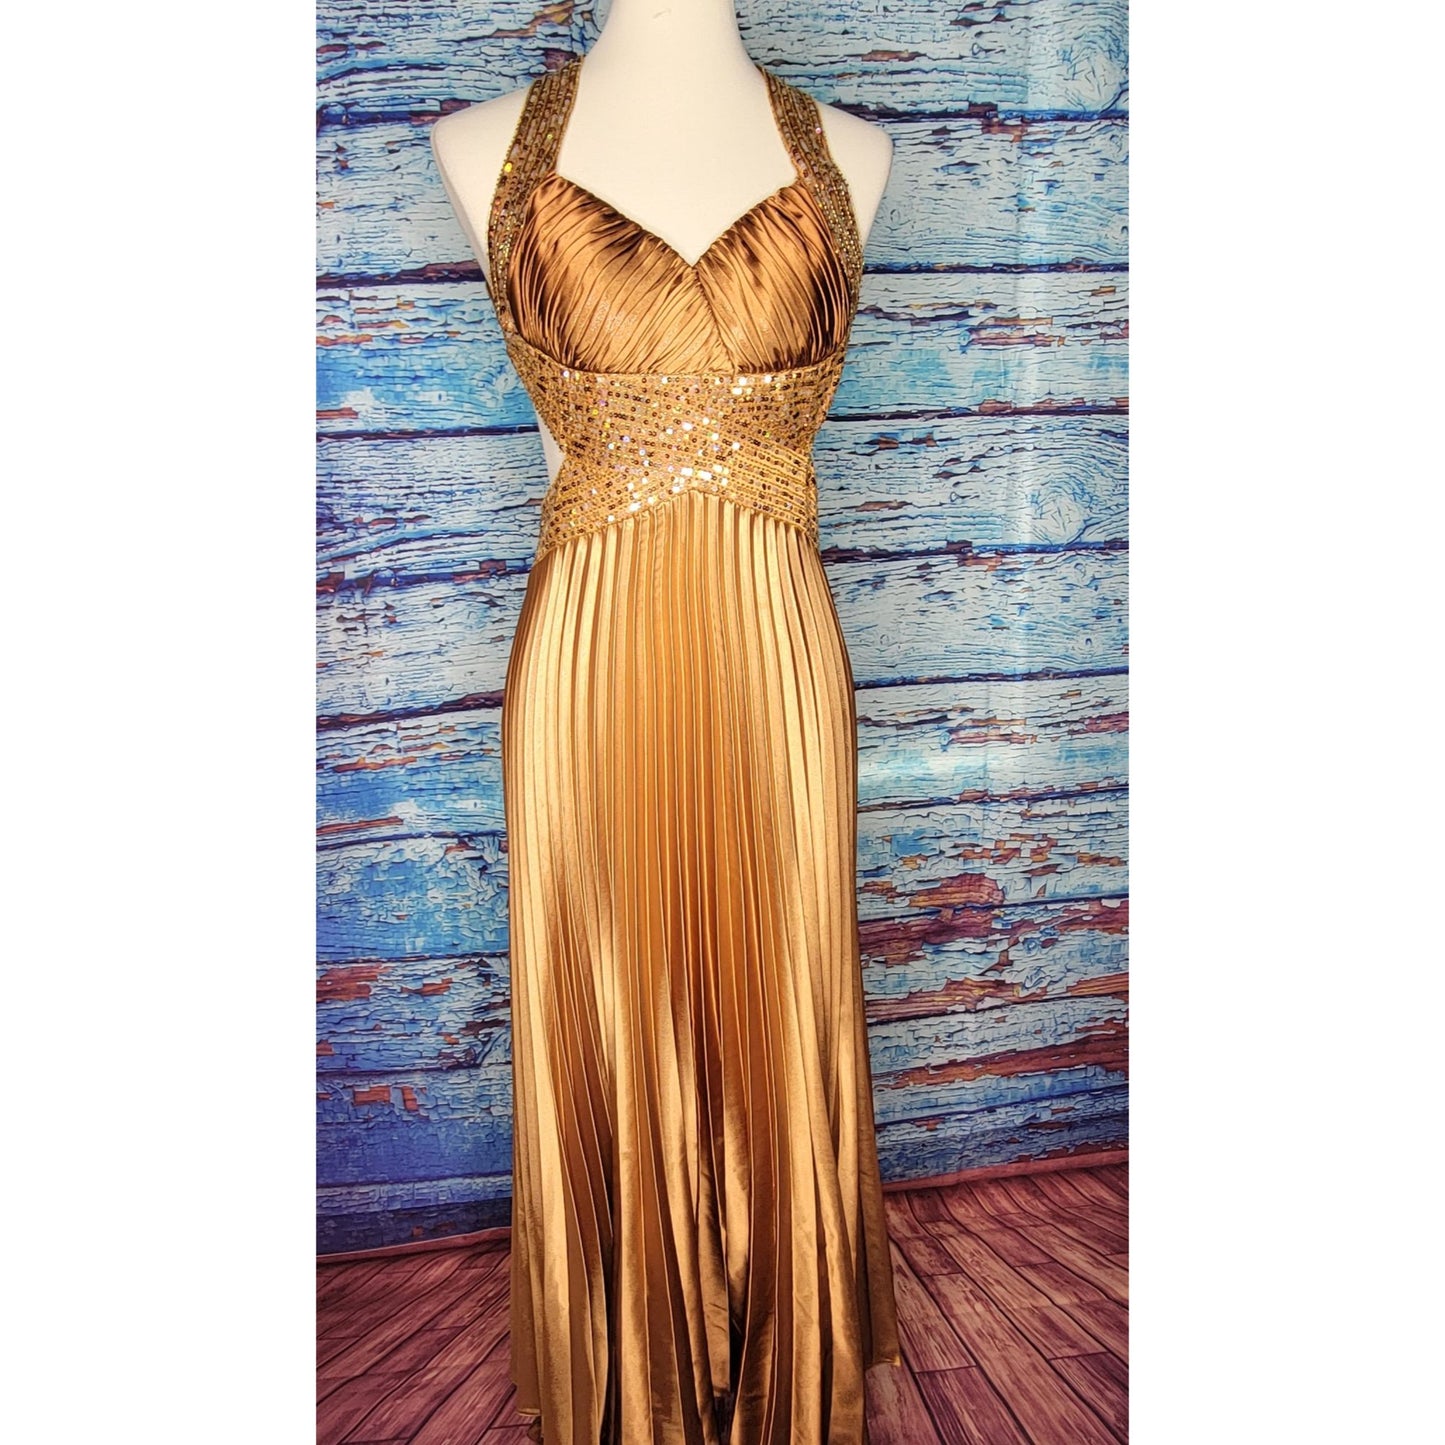 Beautiful Golden Sparkly Sequin Prom/Bridesmaid Dress